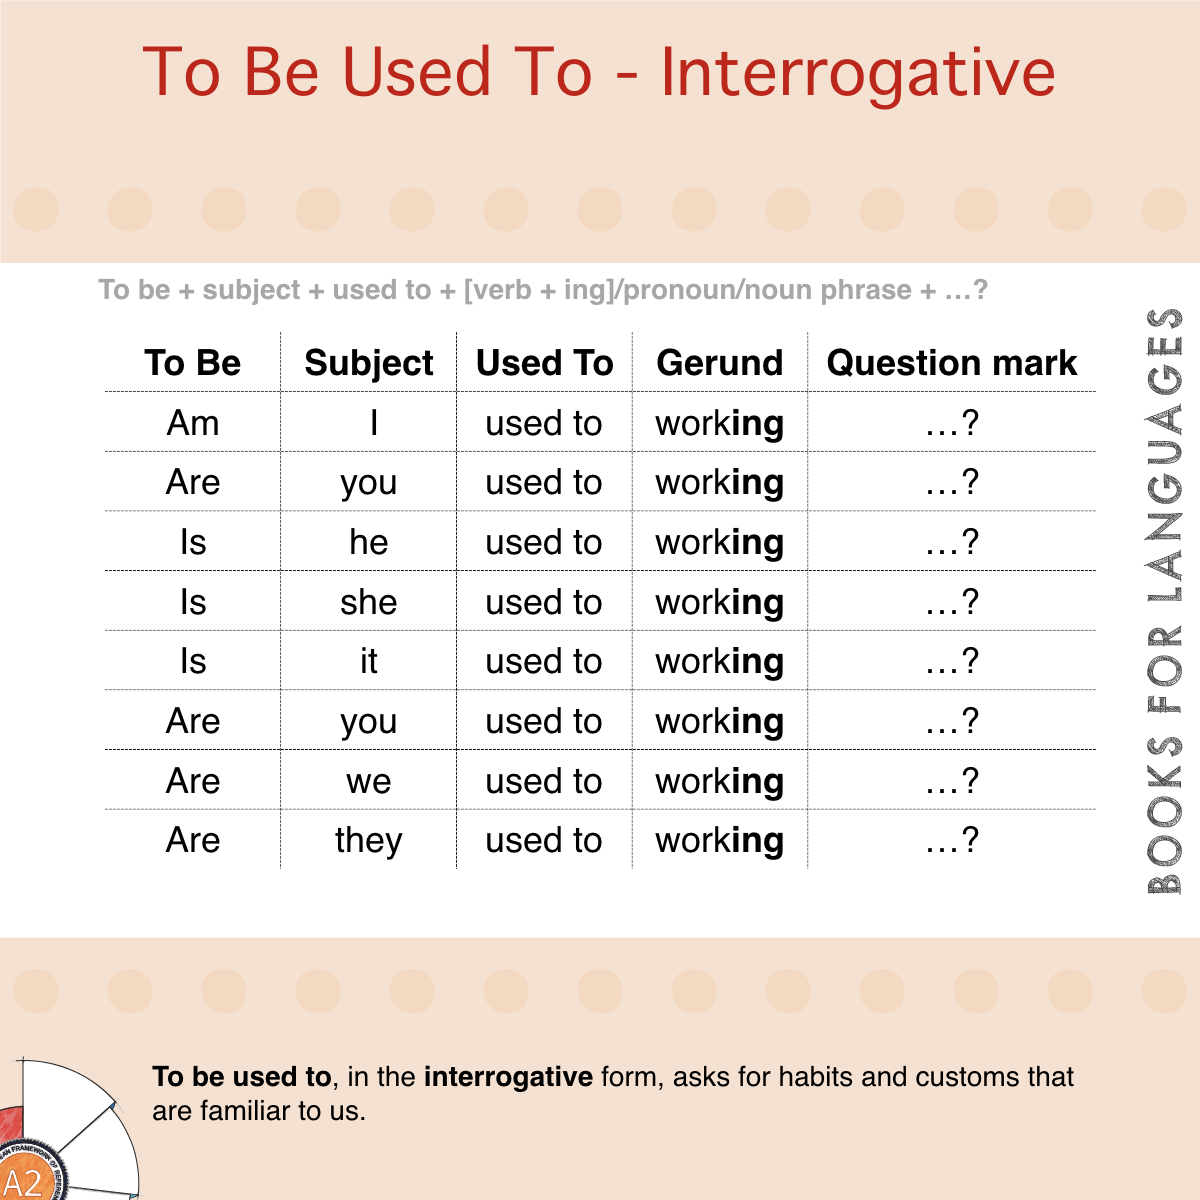 interrogative sentence sample